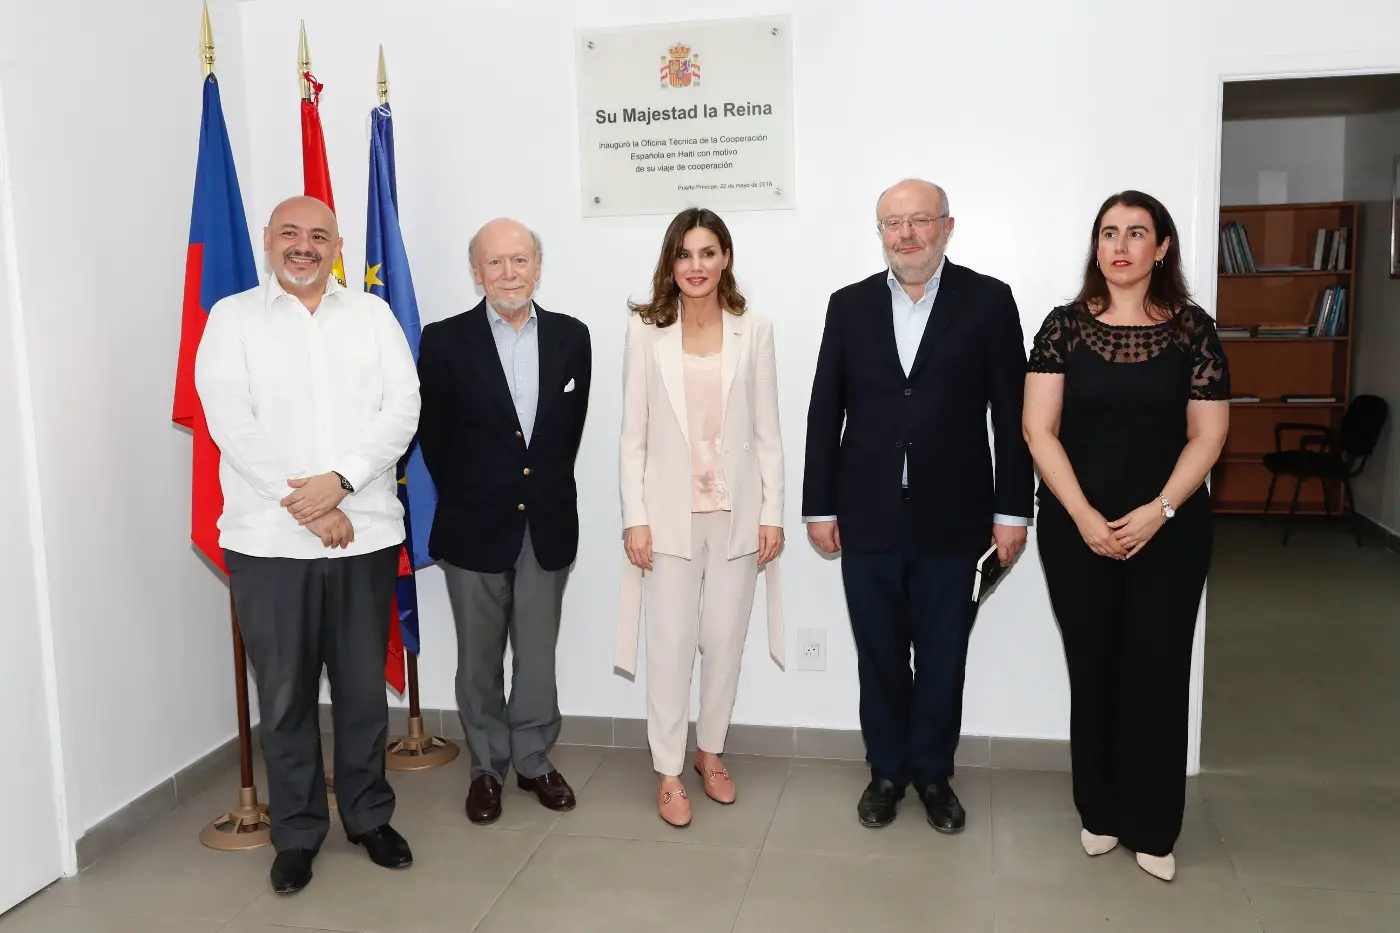 Queen Letizia kicked off Haiti Cooperation tour in style